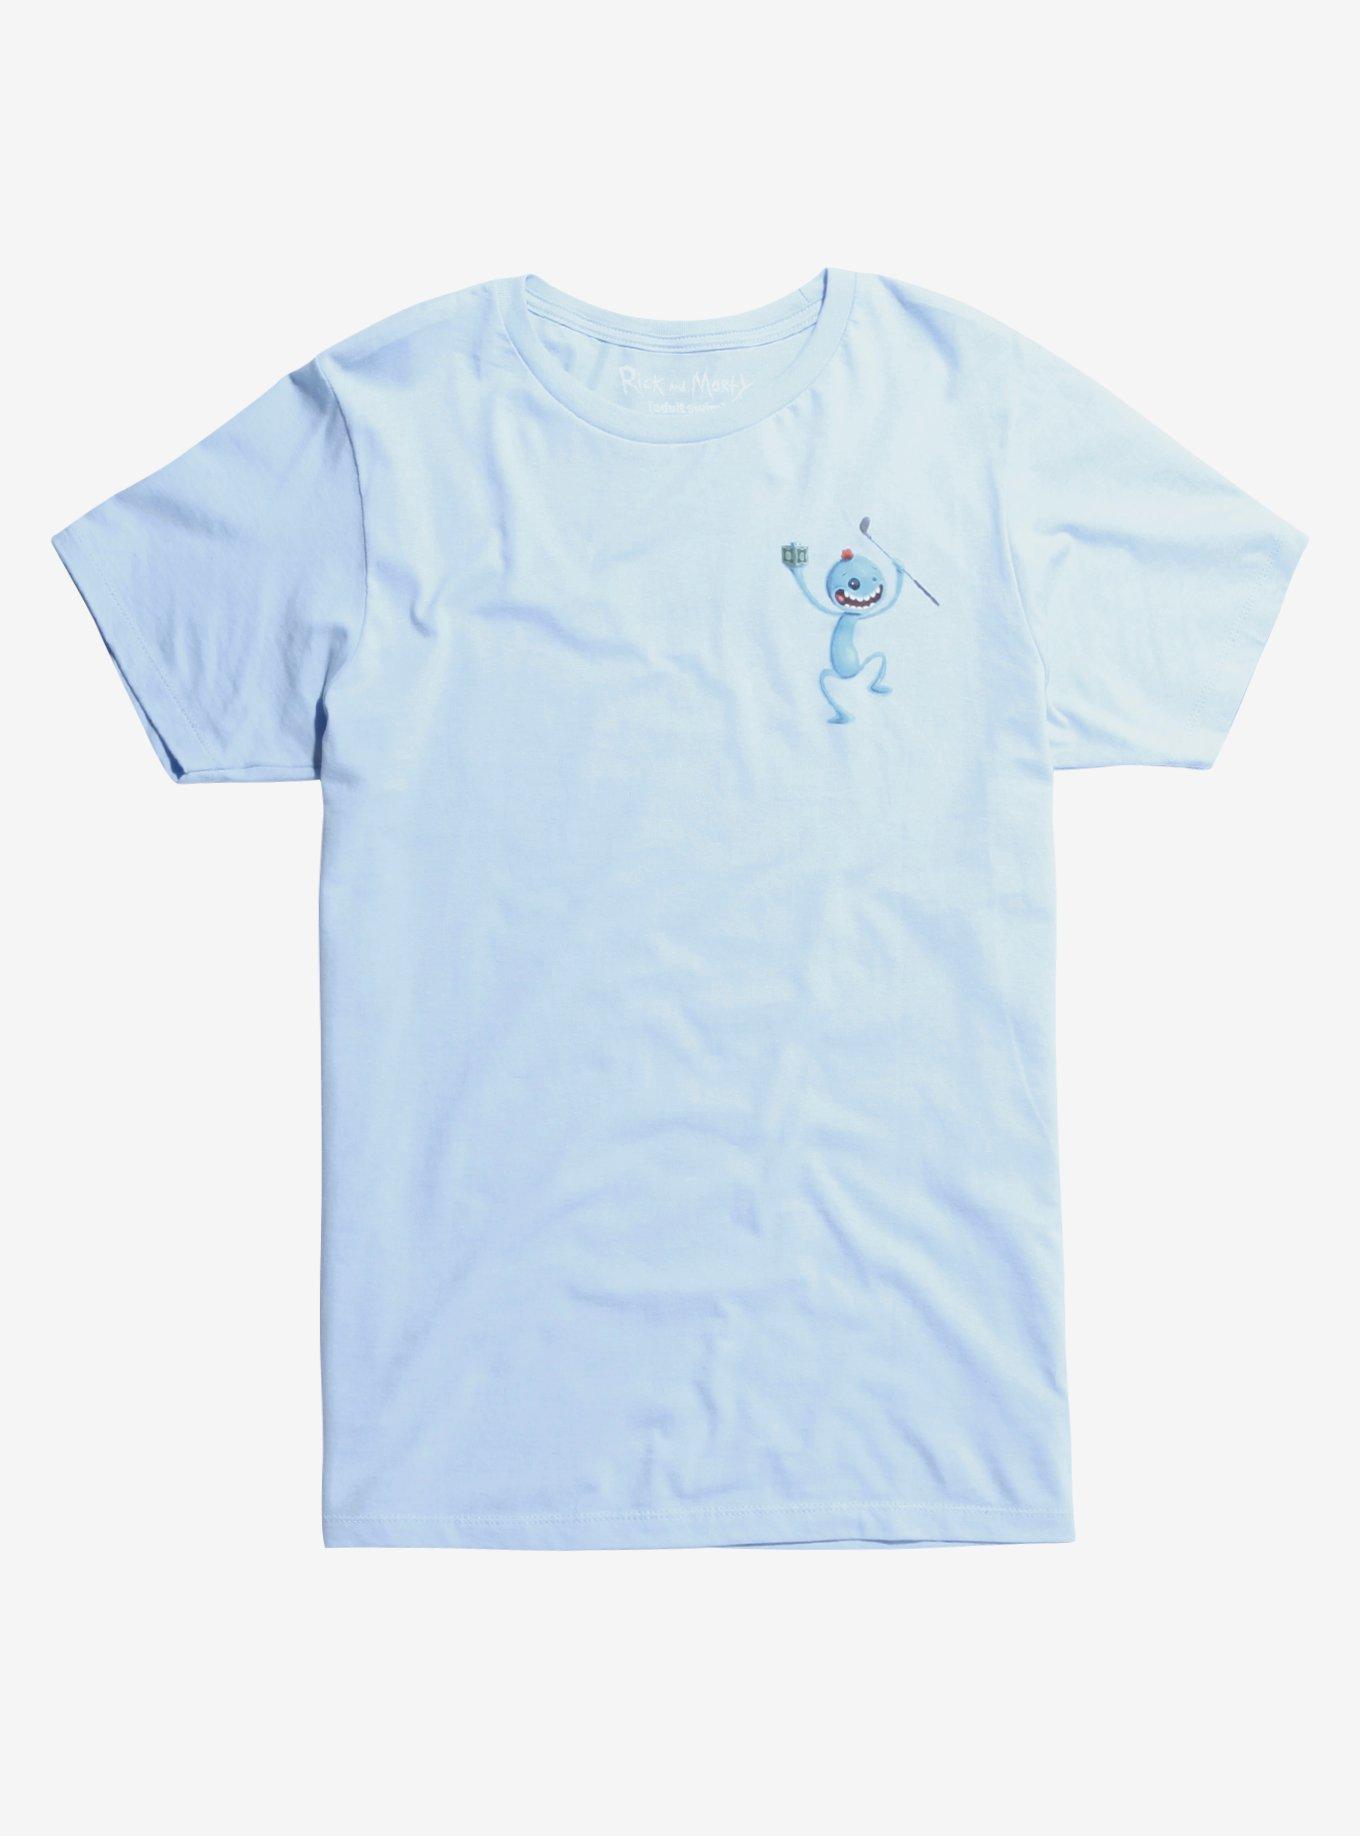 Rick And Morty Mr. Meeseeks T-Shirt, BLUE, hi-res